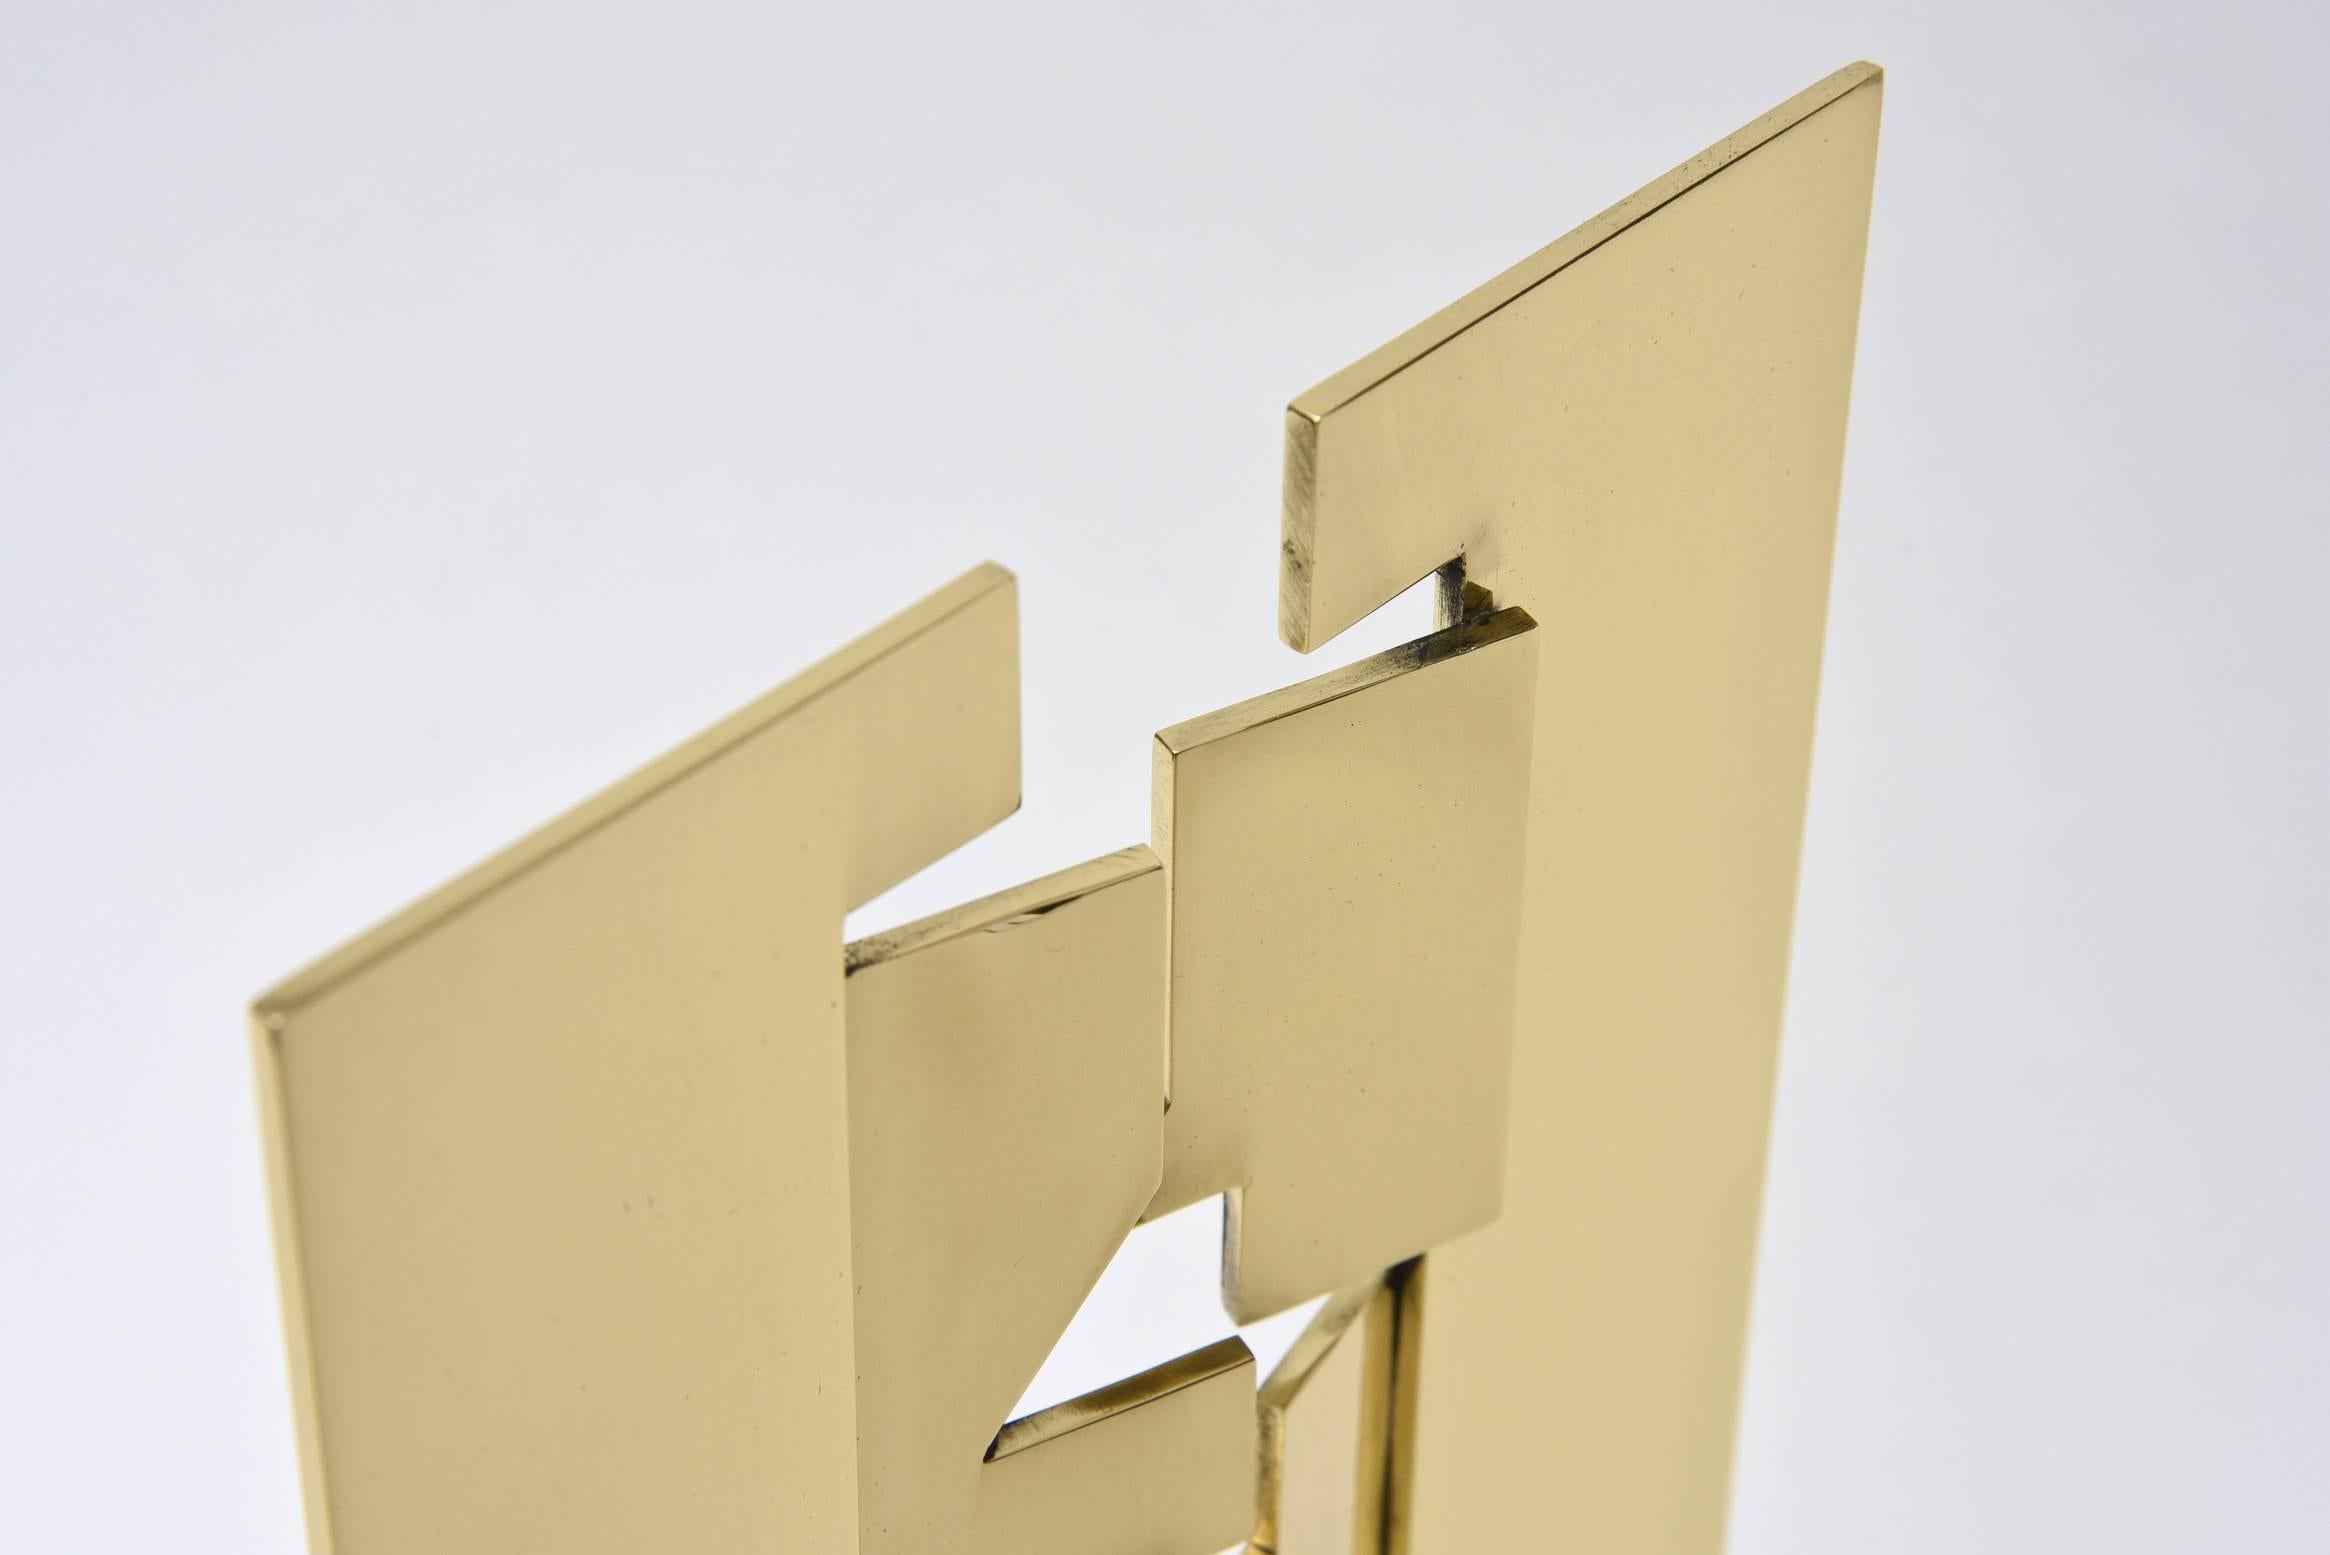  Marino di Teana Italian Brass Modernist Geometric Tabletop Signed Sculpture 1